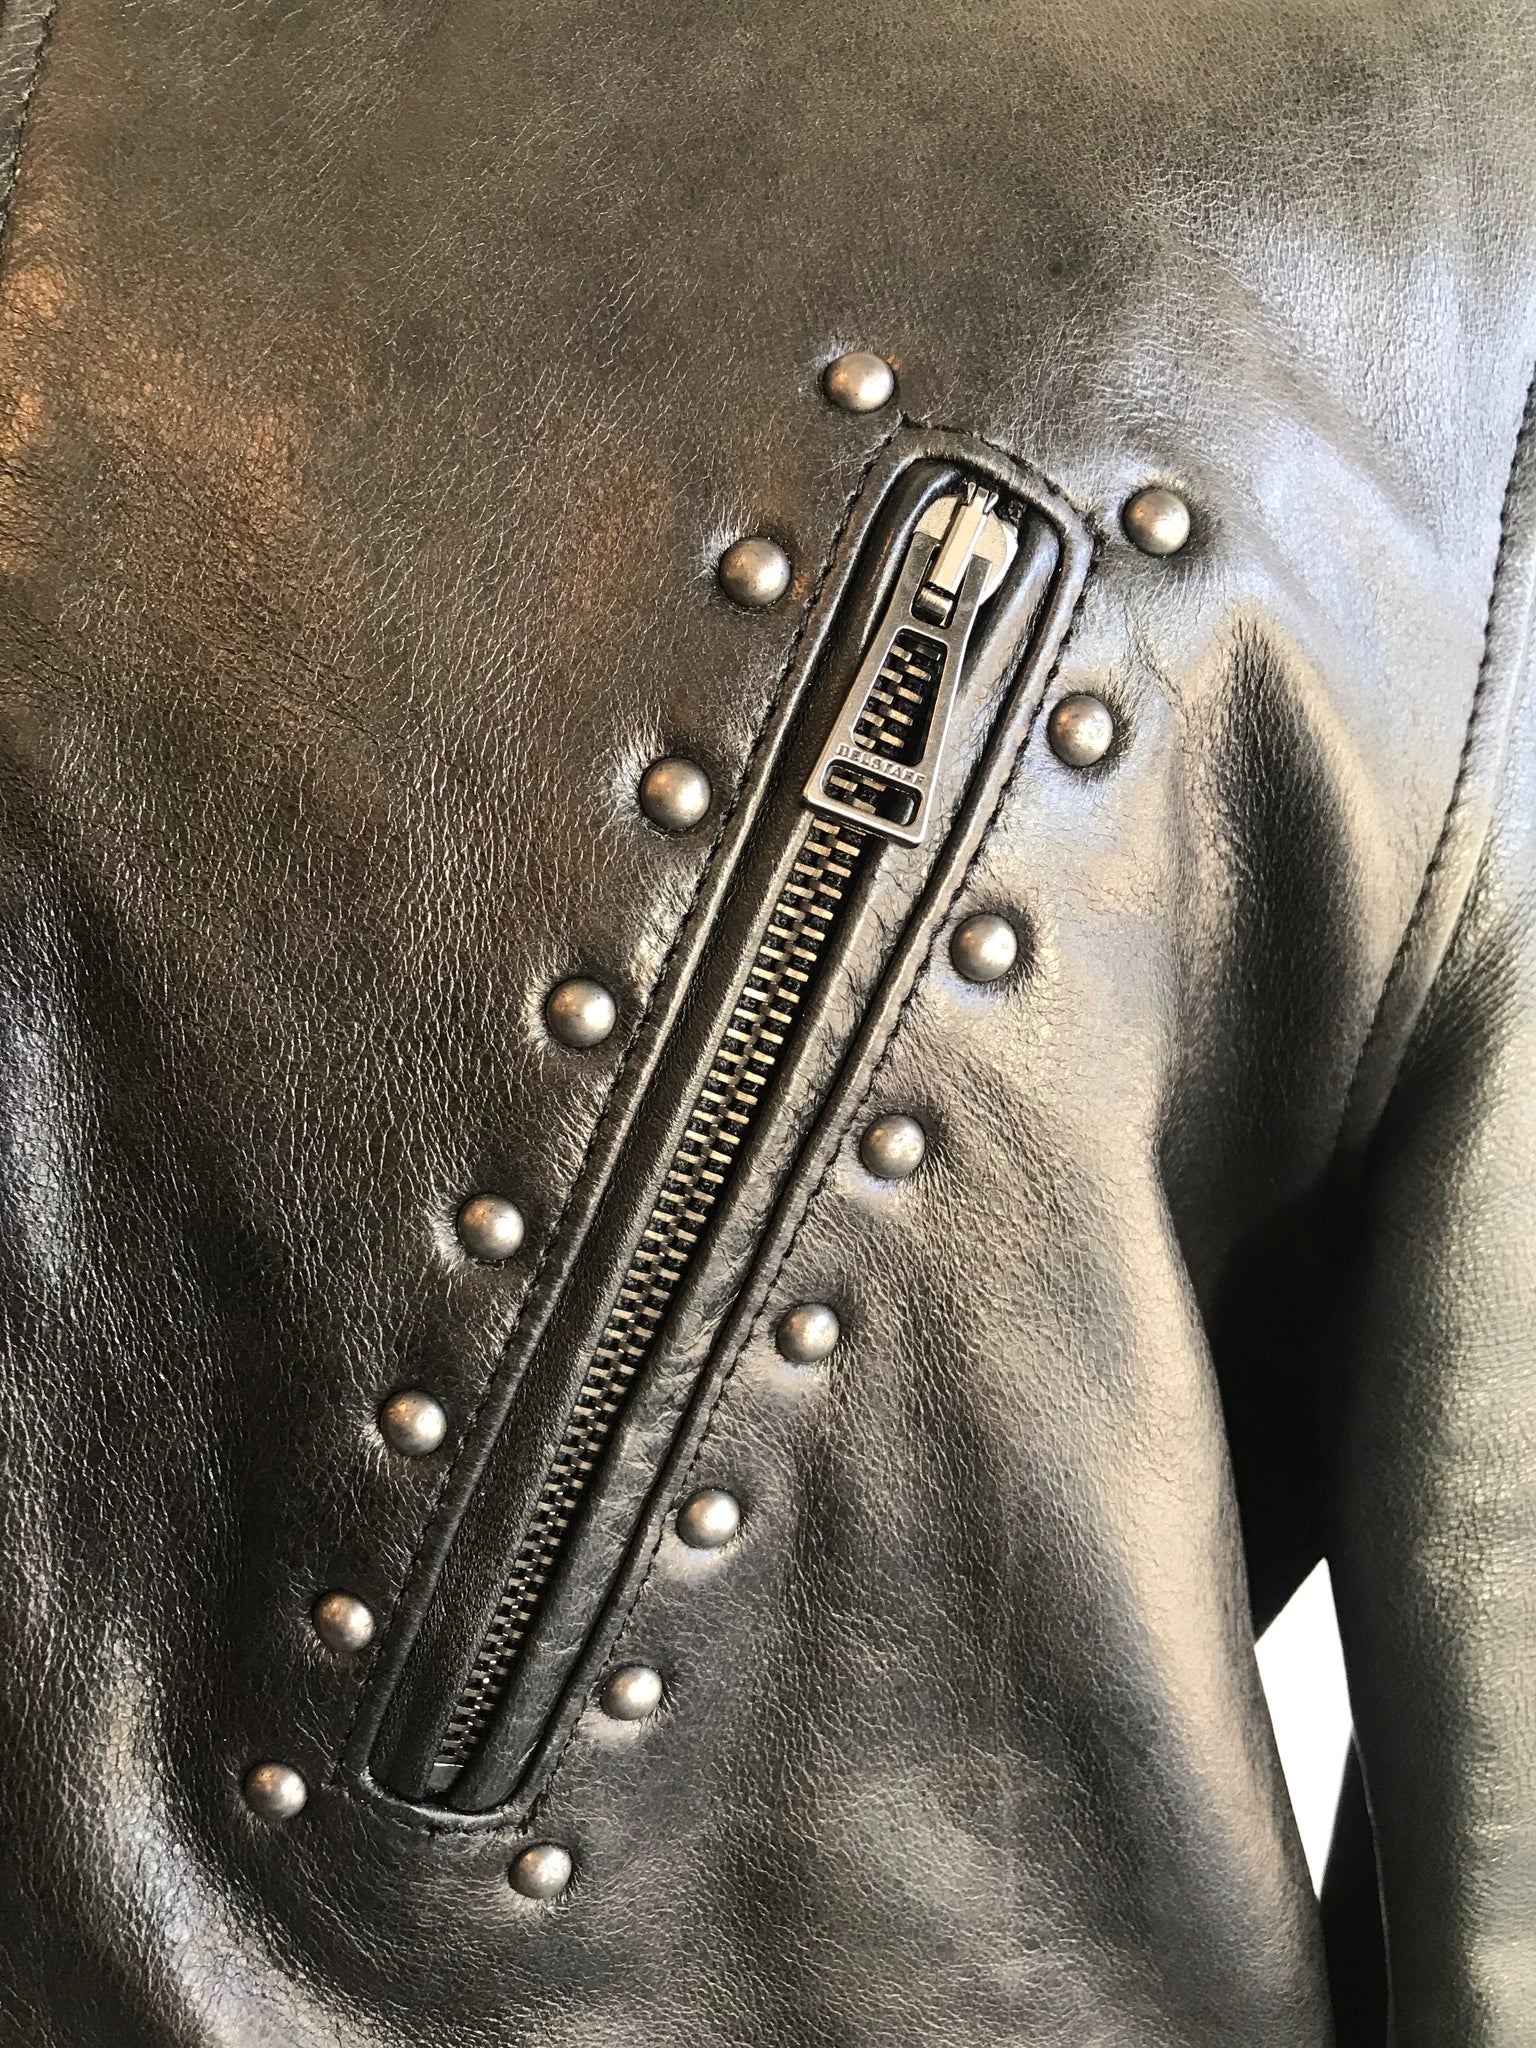 Isabella's Wardrobe Belstaff Gents Studded Leather Jacket.